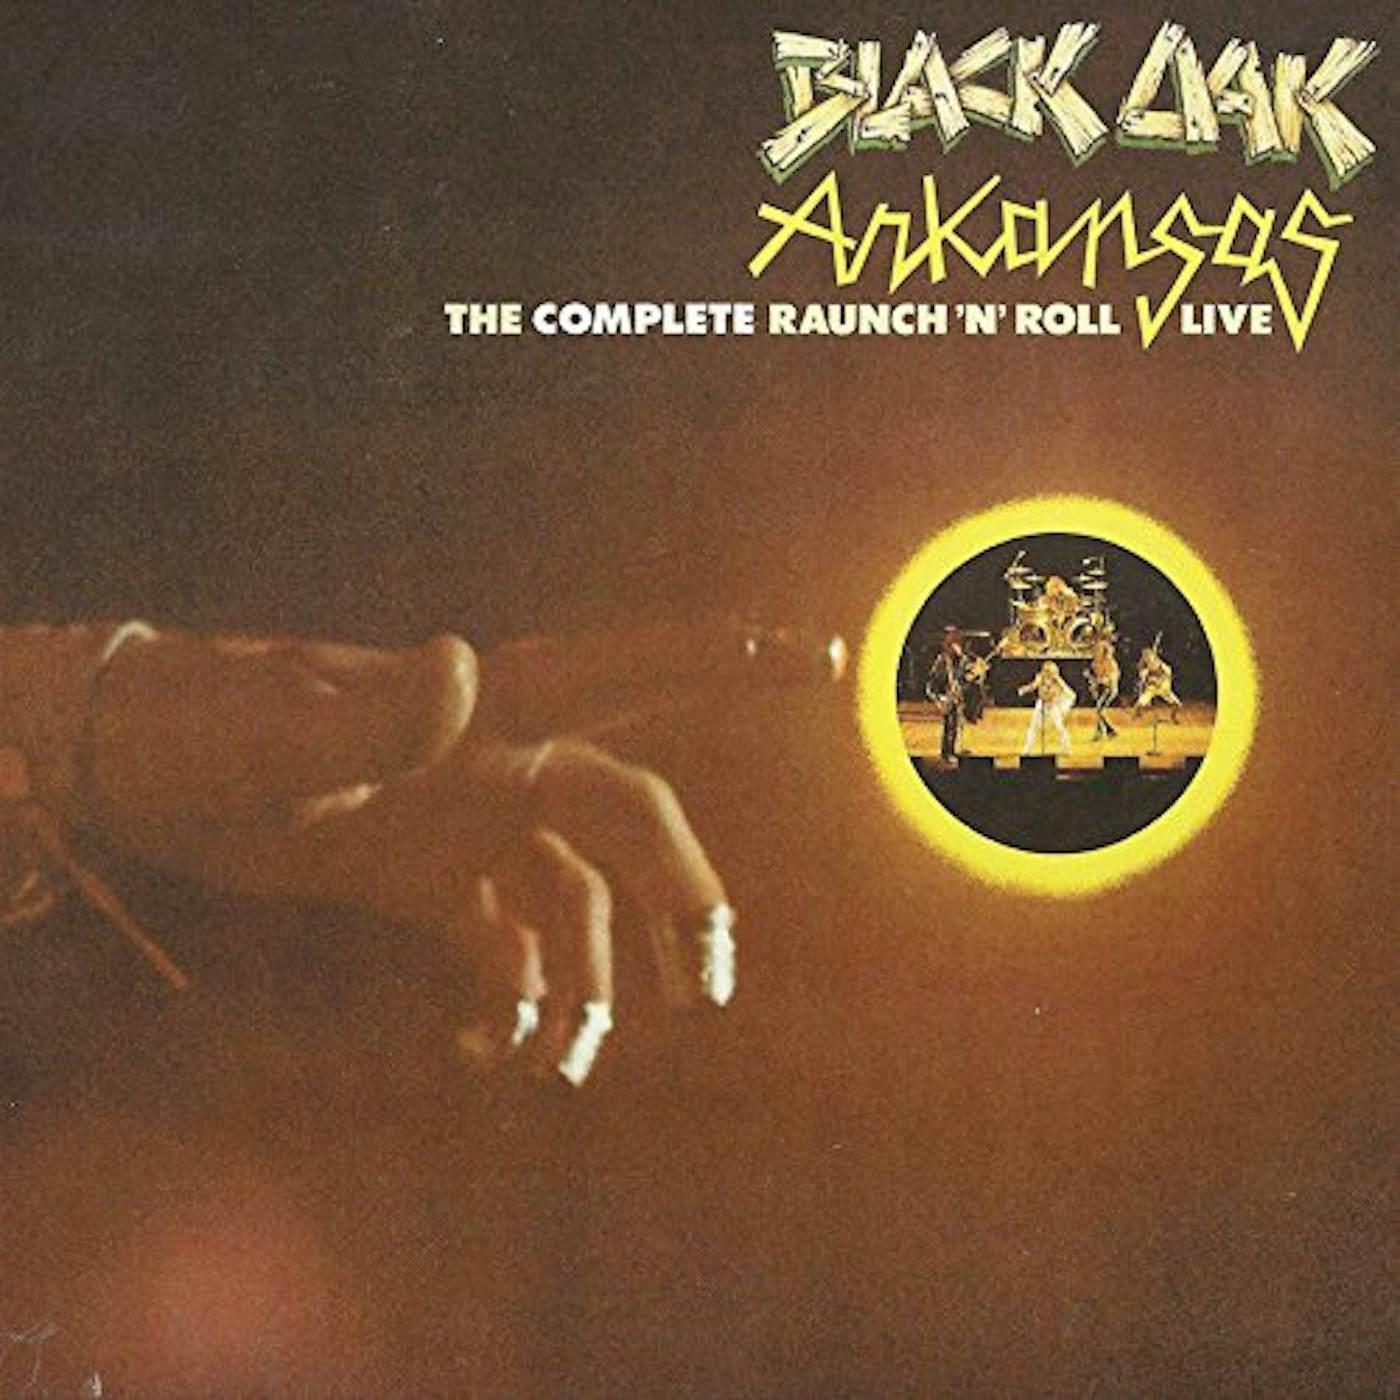 Black Oak Arkansas COMPLETE RAUNCH N ROLL LIVE CD